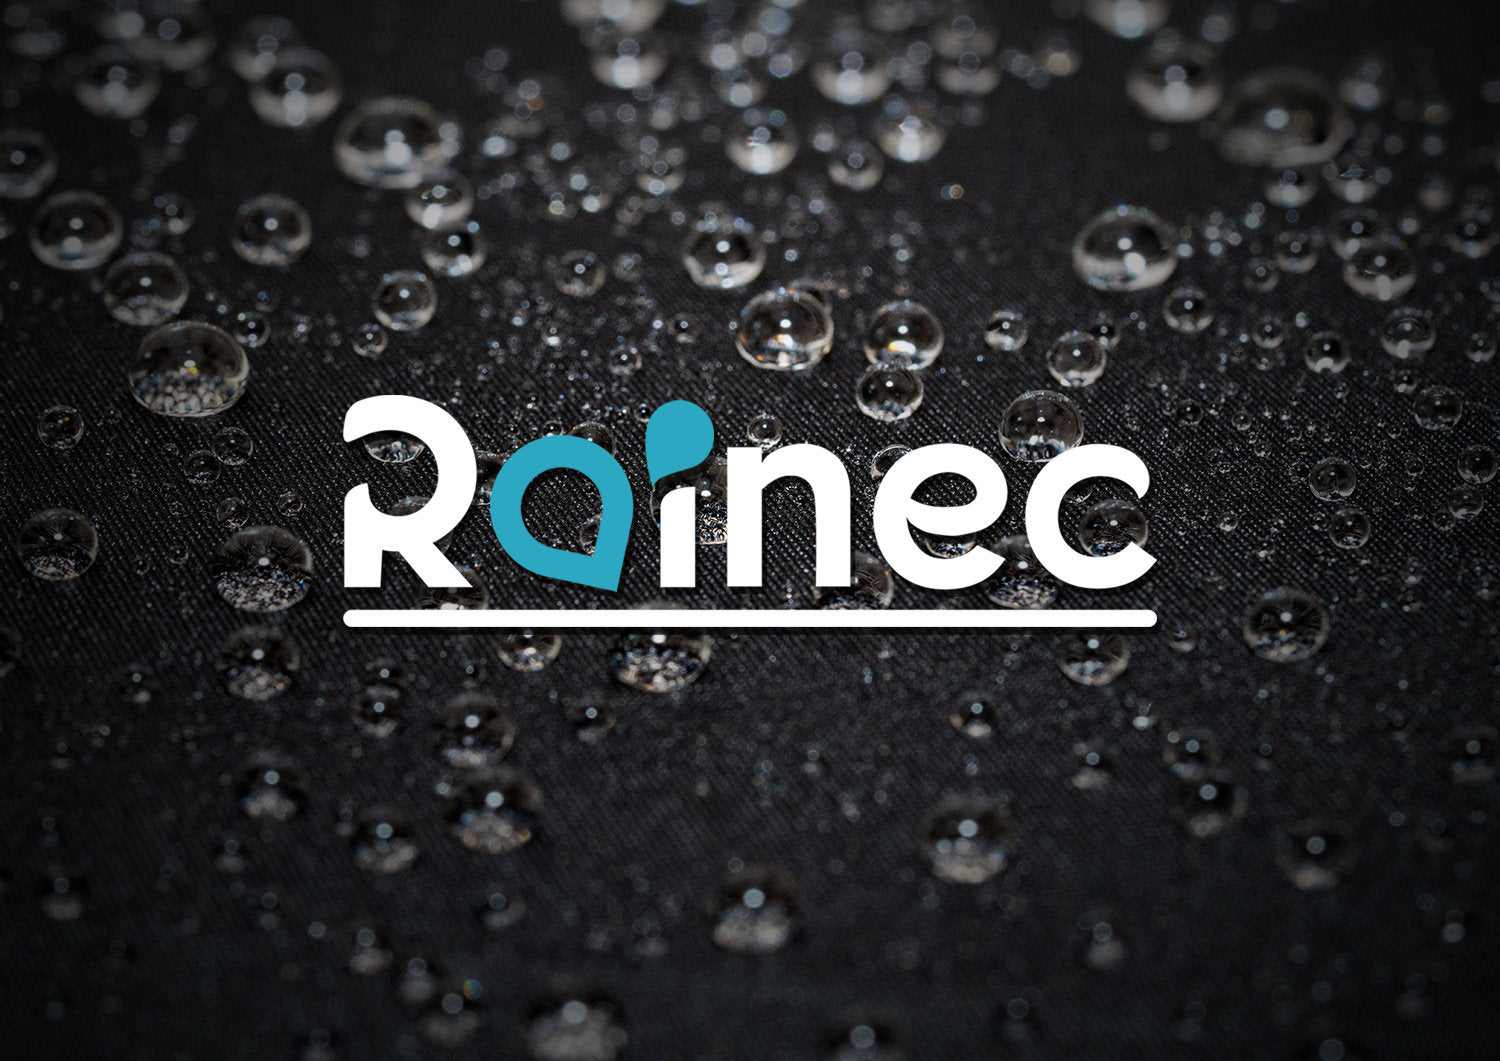 RAINEC - AIR ultra-light opaque water-repellent folding umbrella - graphite black